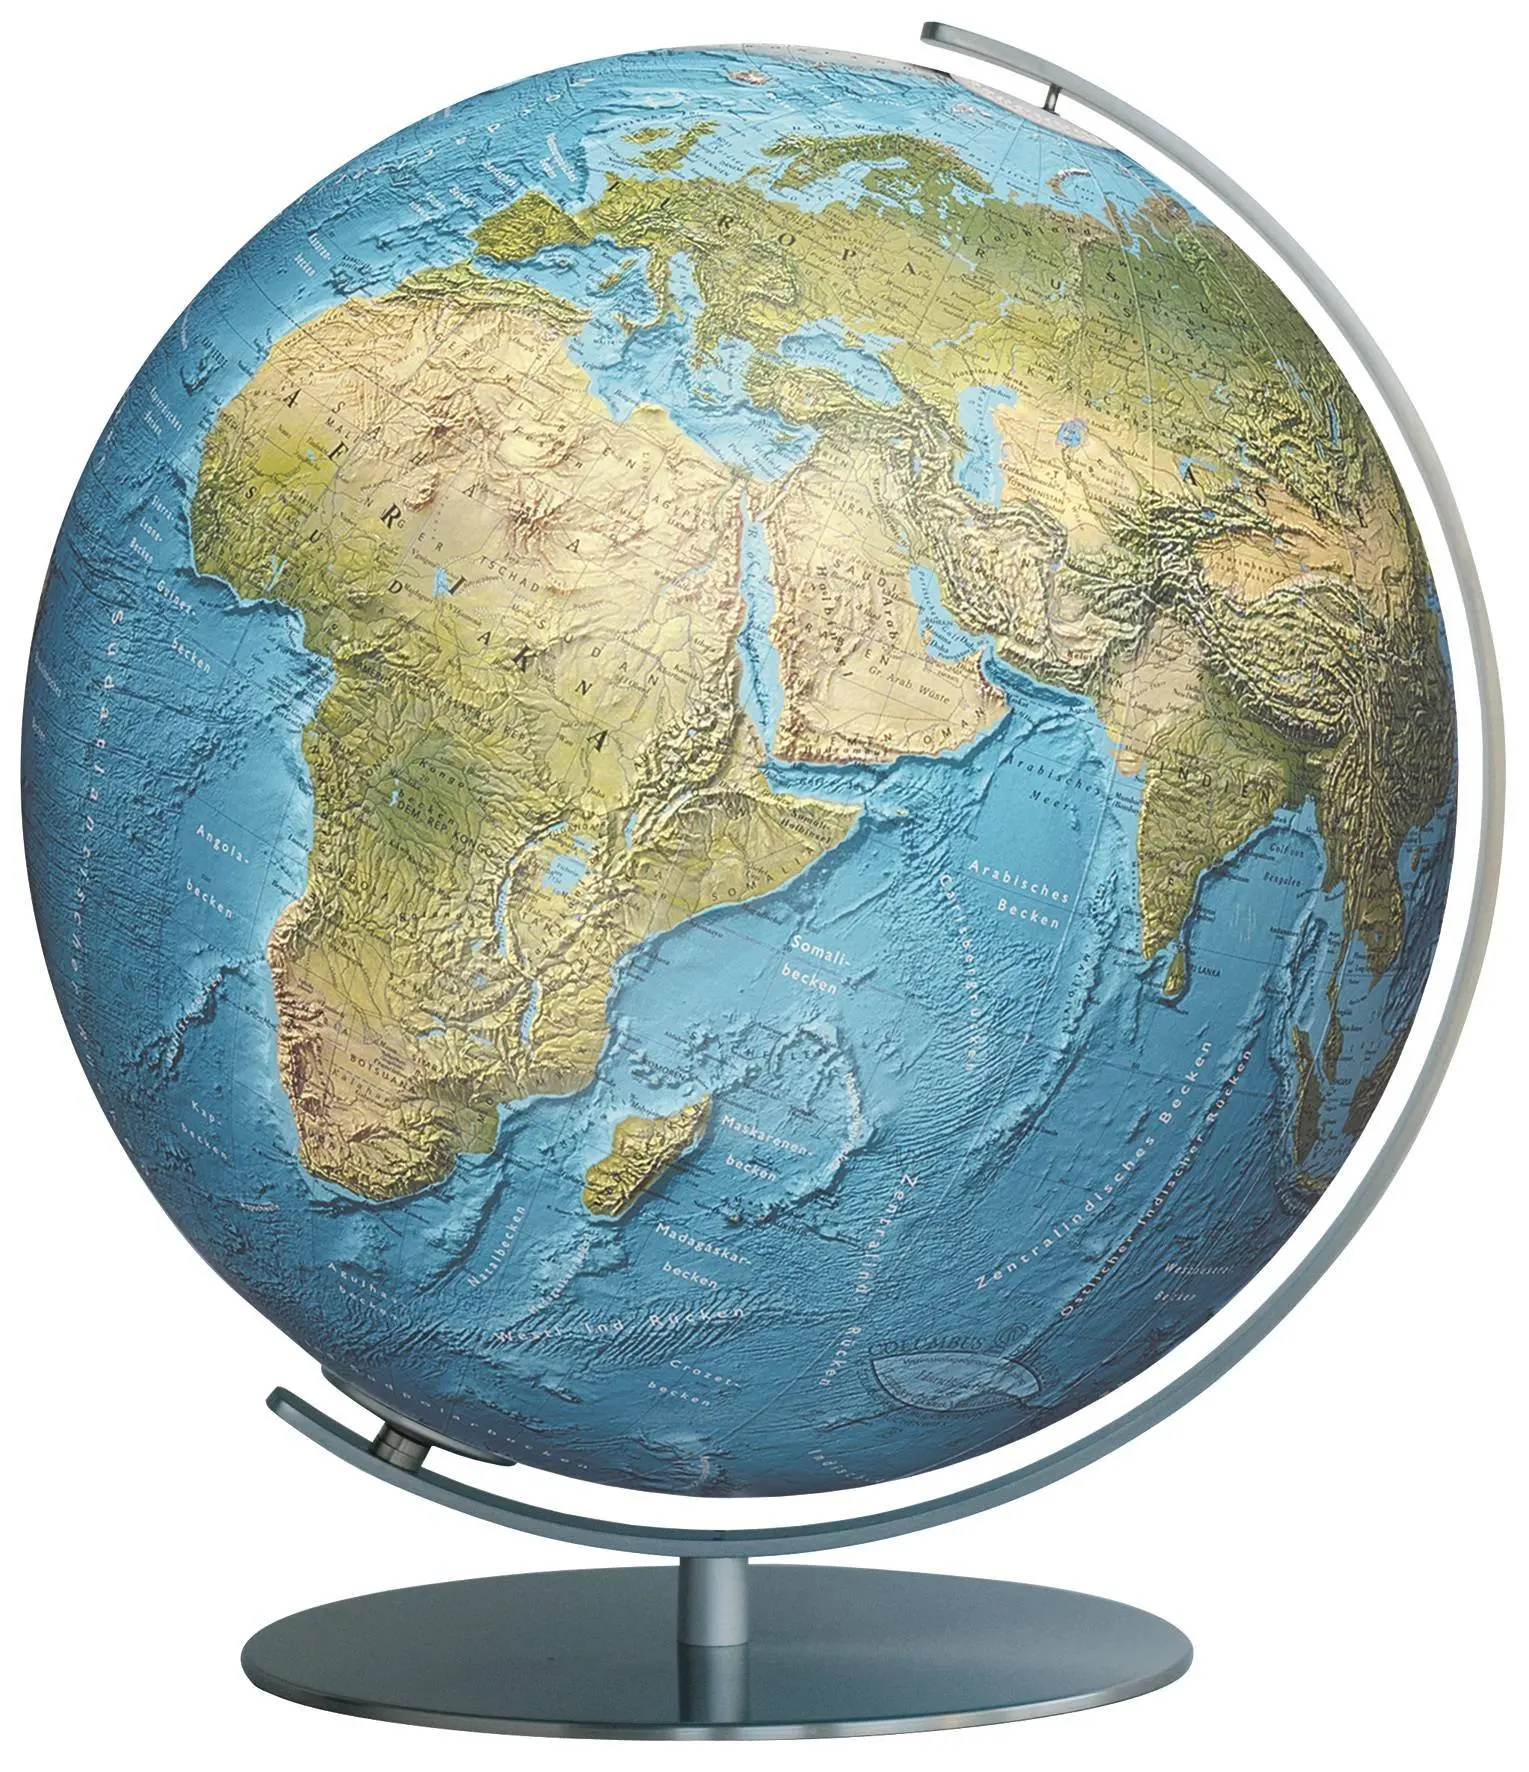 Cheap Globe Desktop, find Globe Desktop deals on line at Alibaba.com